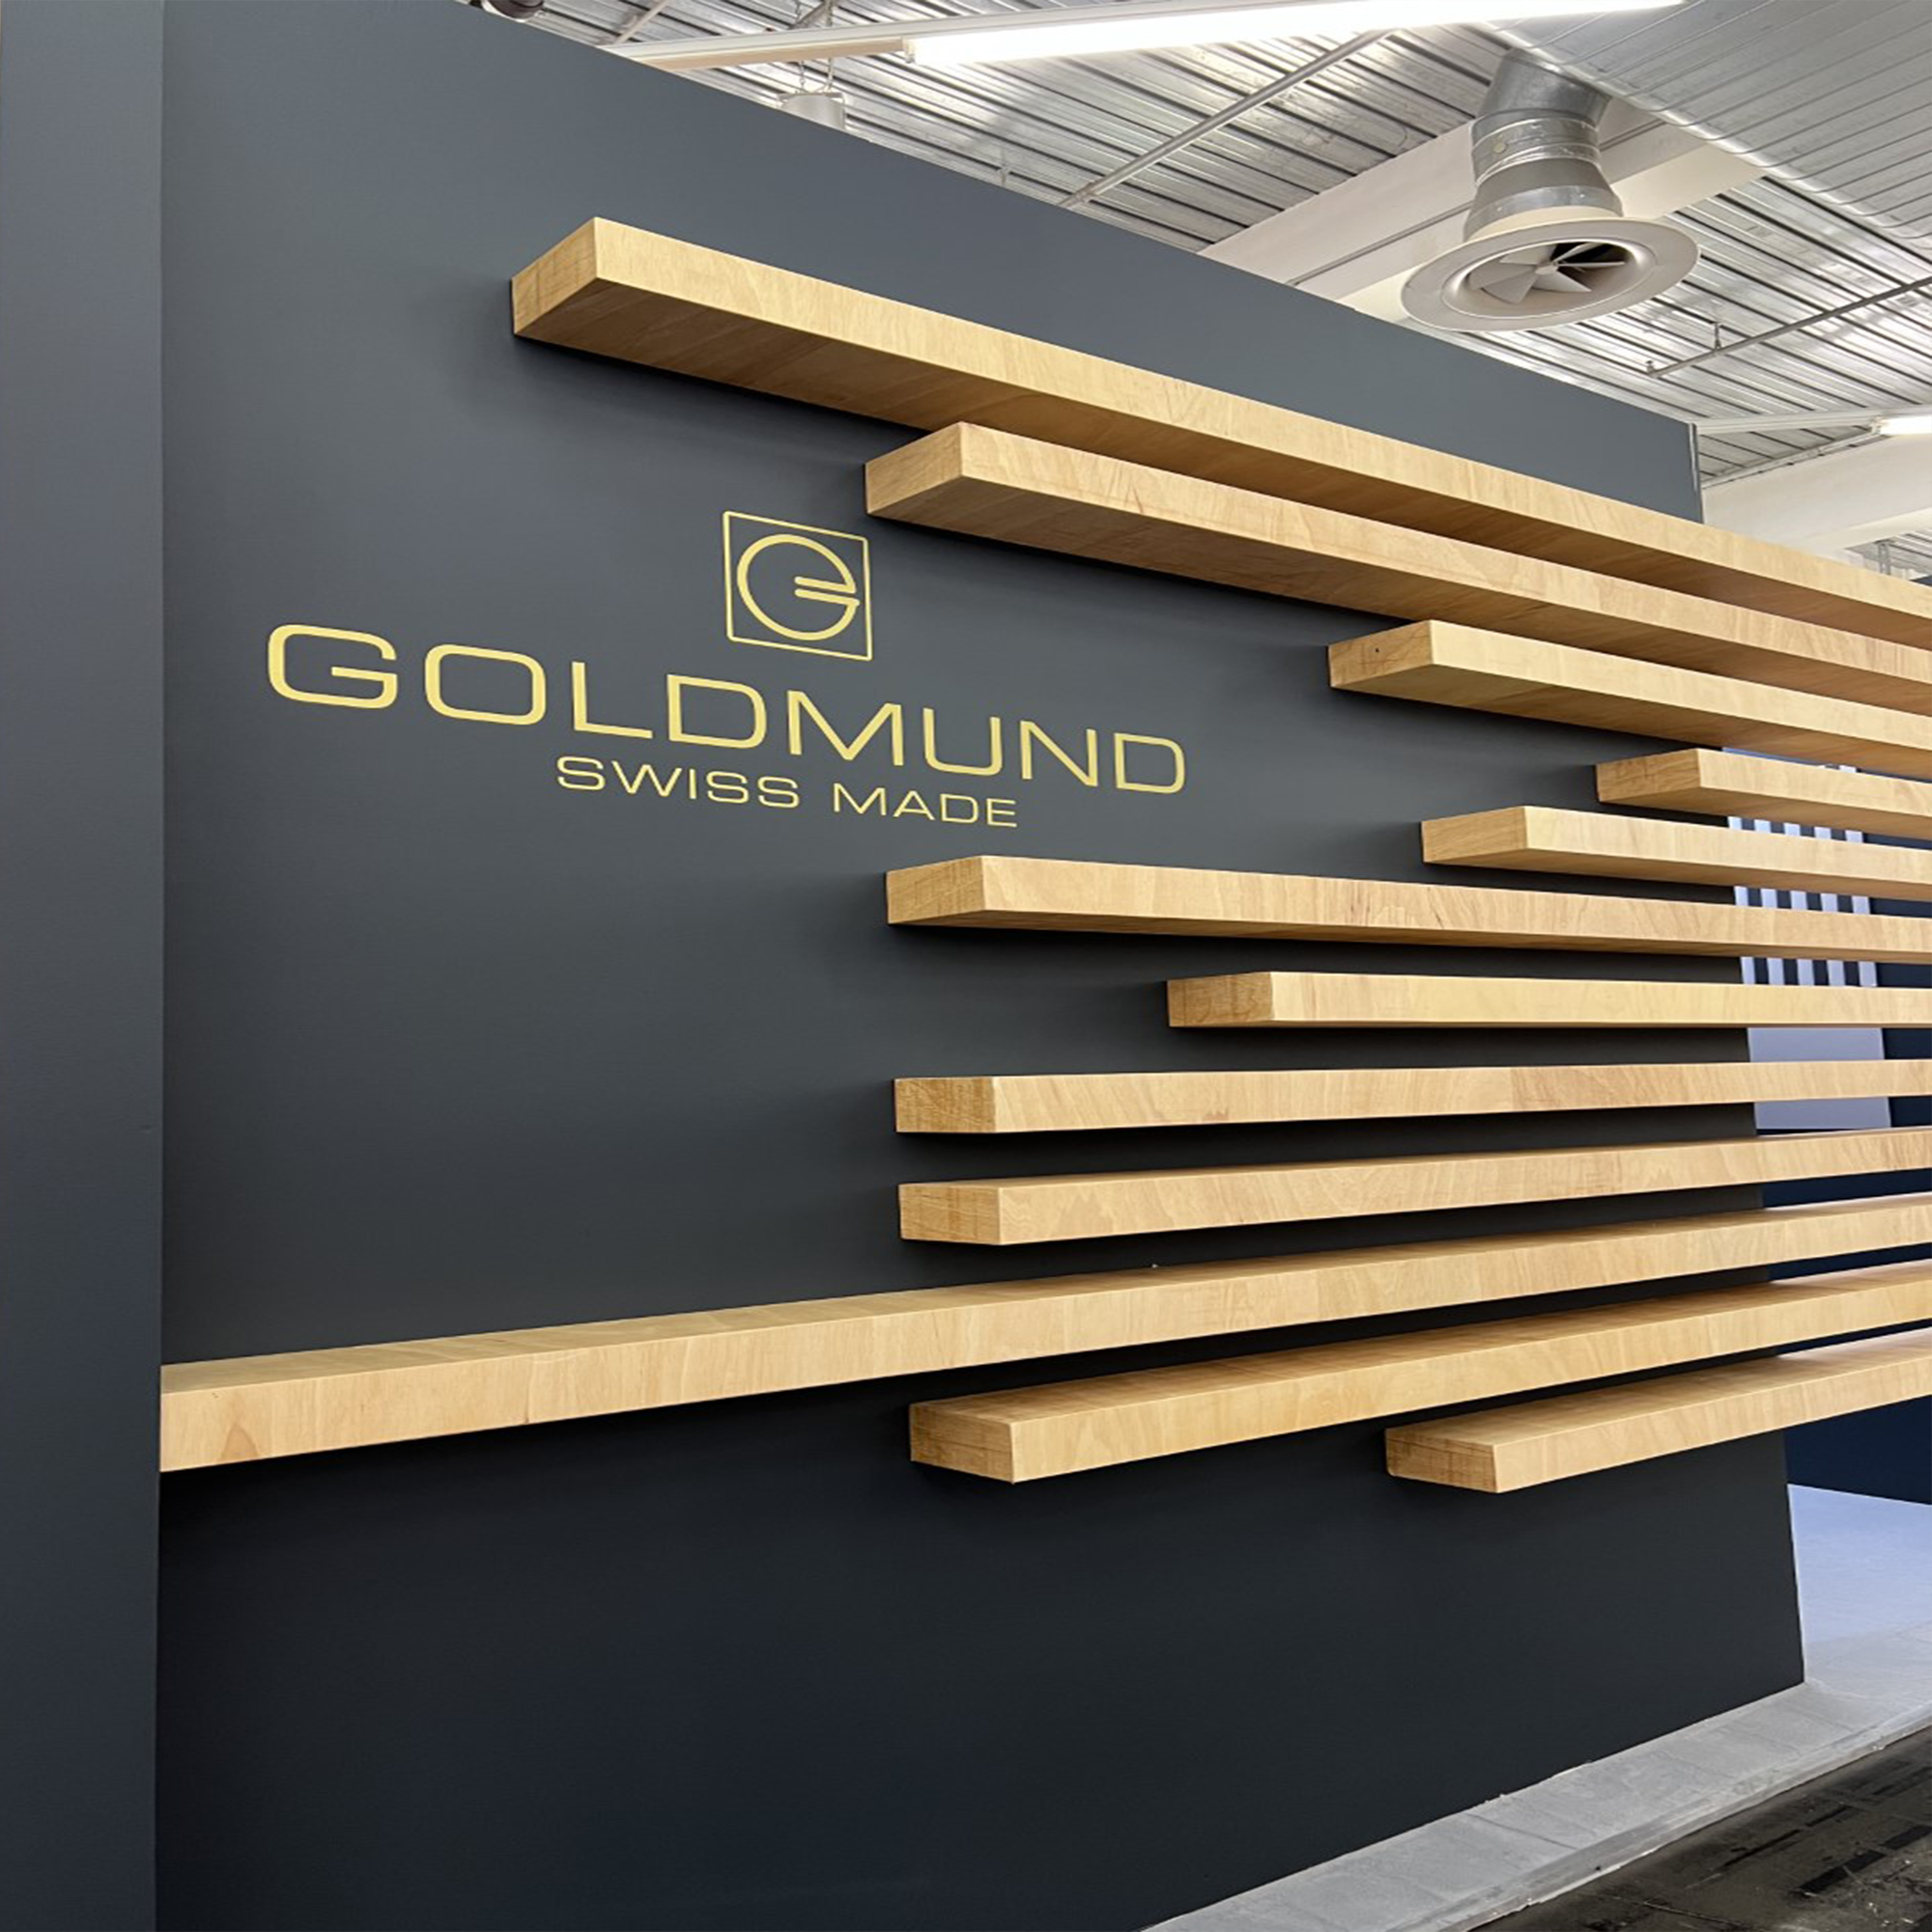 Goldmund flagship speakers